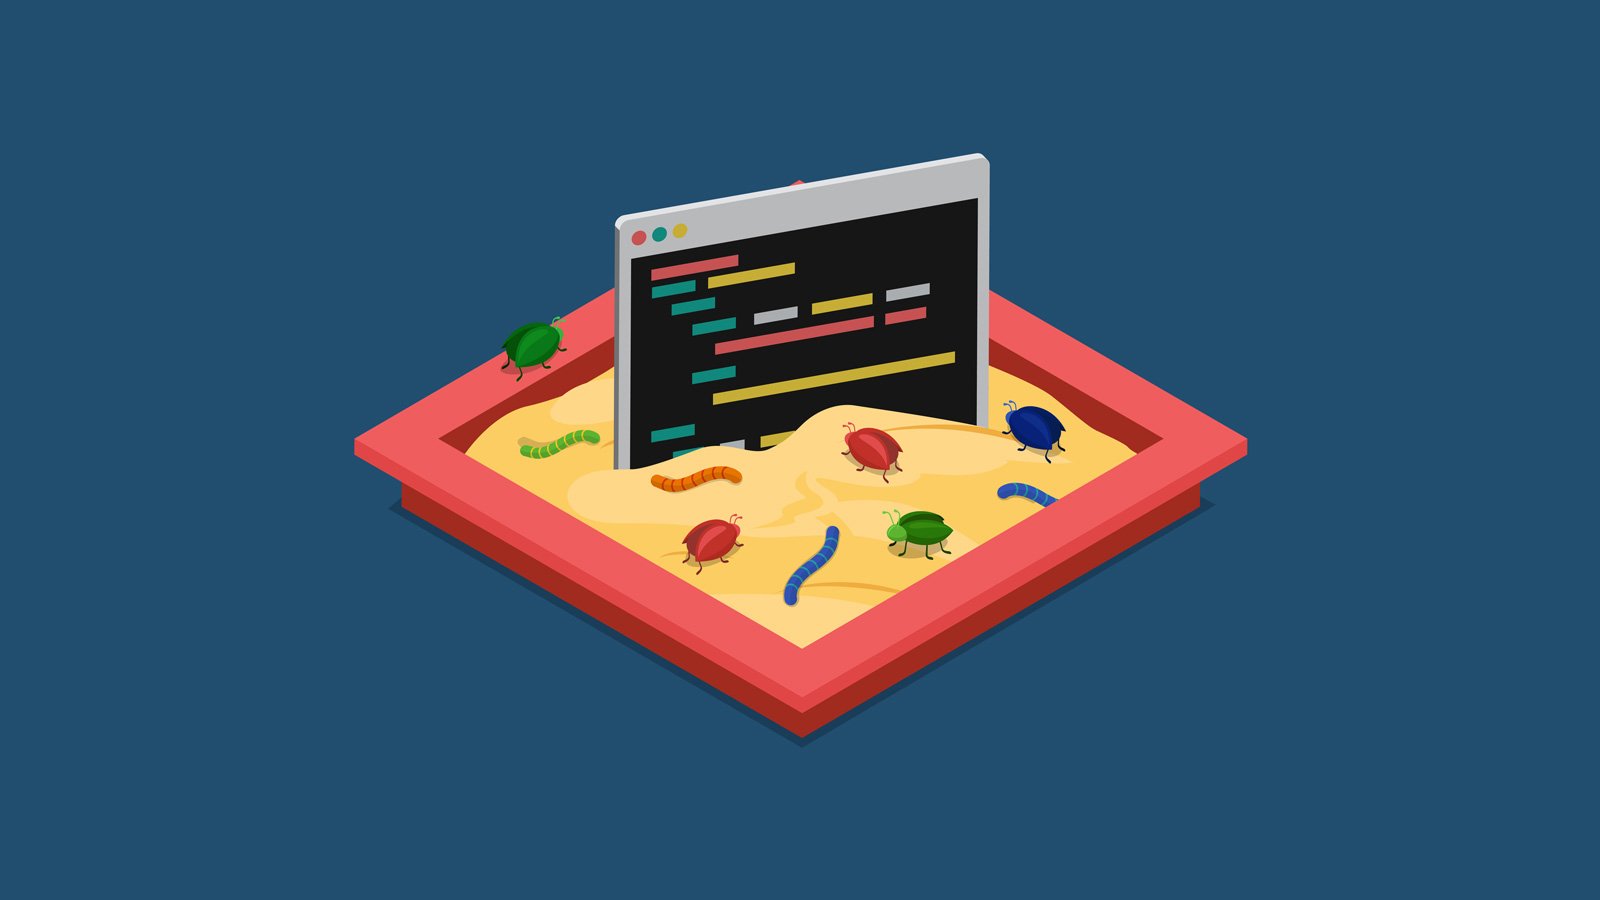 Malicious code running in a sandbox